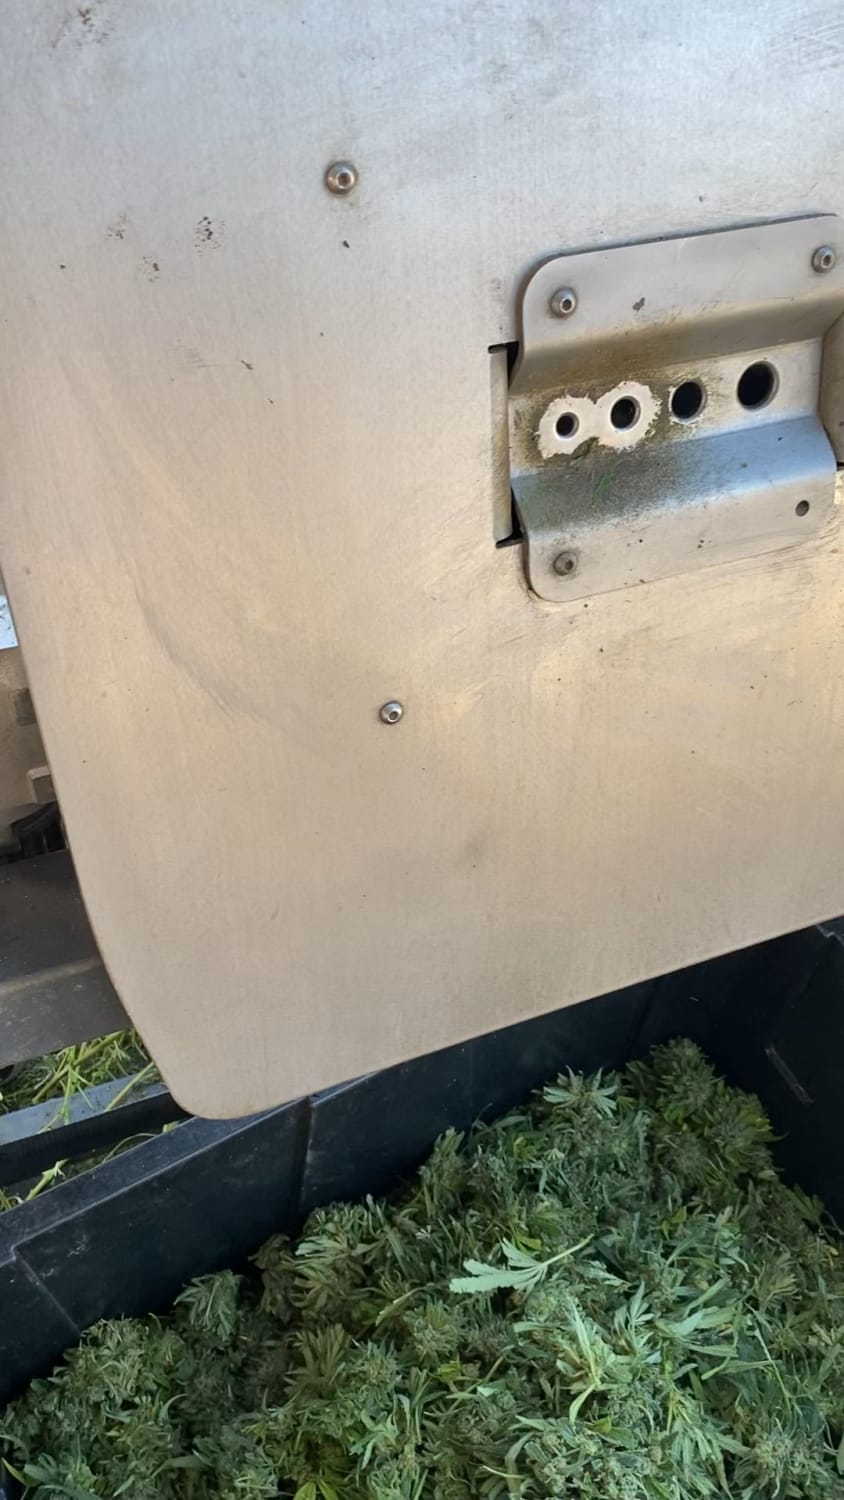 This is a Munch Machine, helps buck down a lot Cannabis